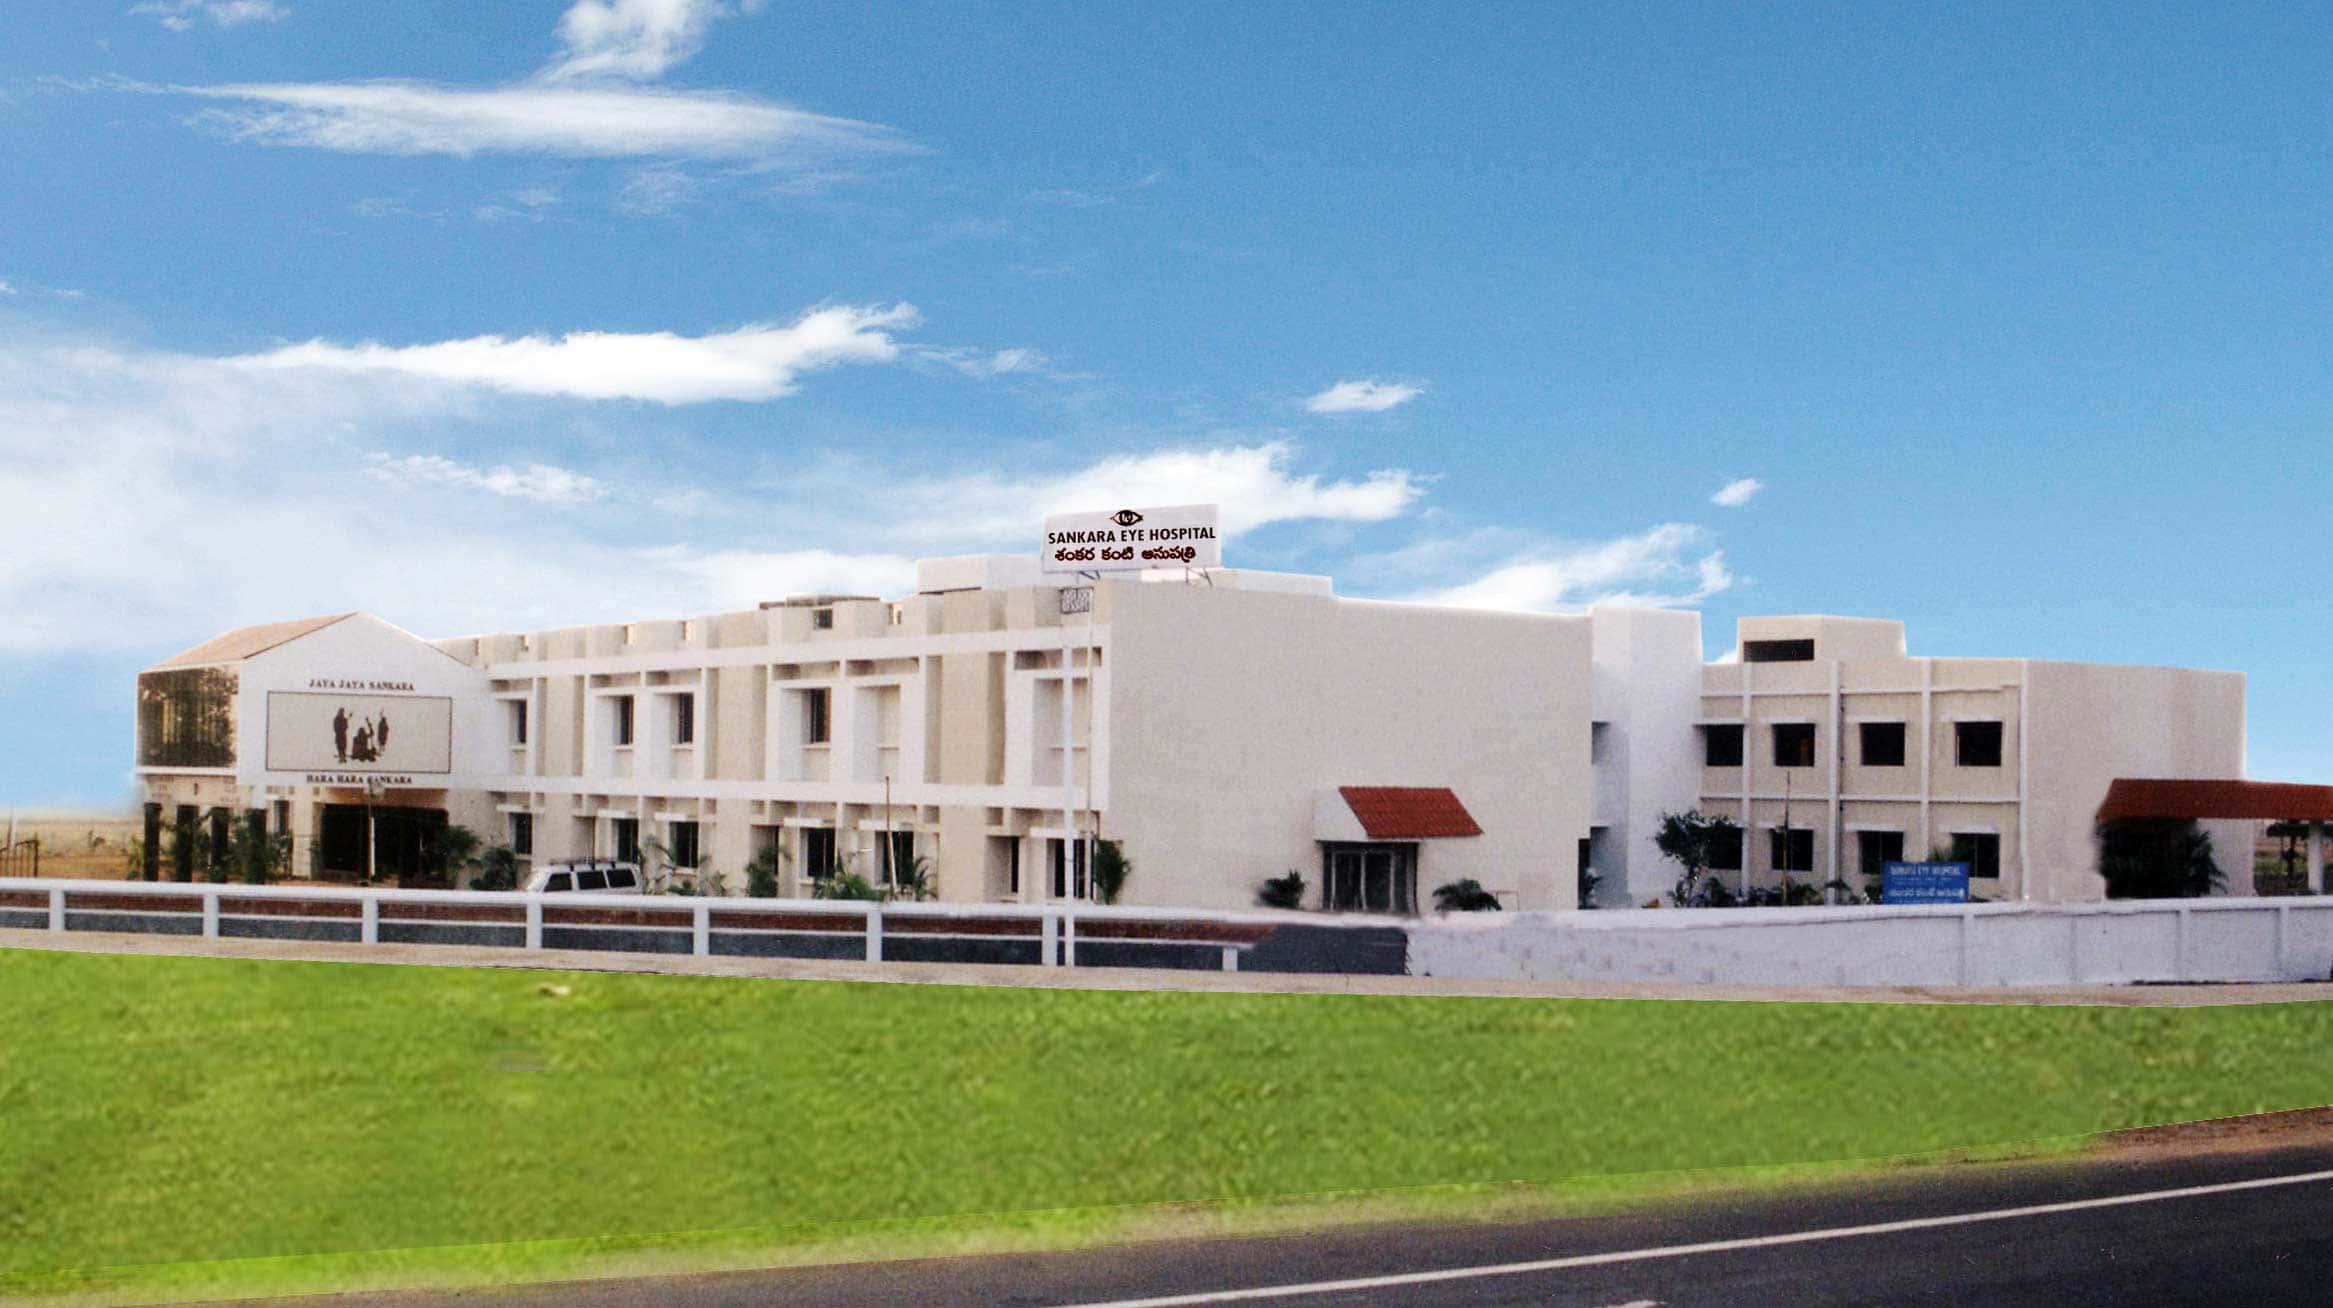 Sankara eye specialty hospital located in Guntur